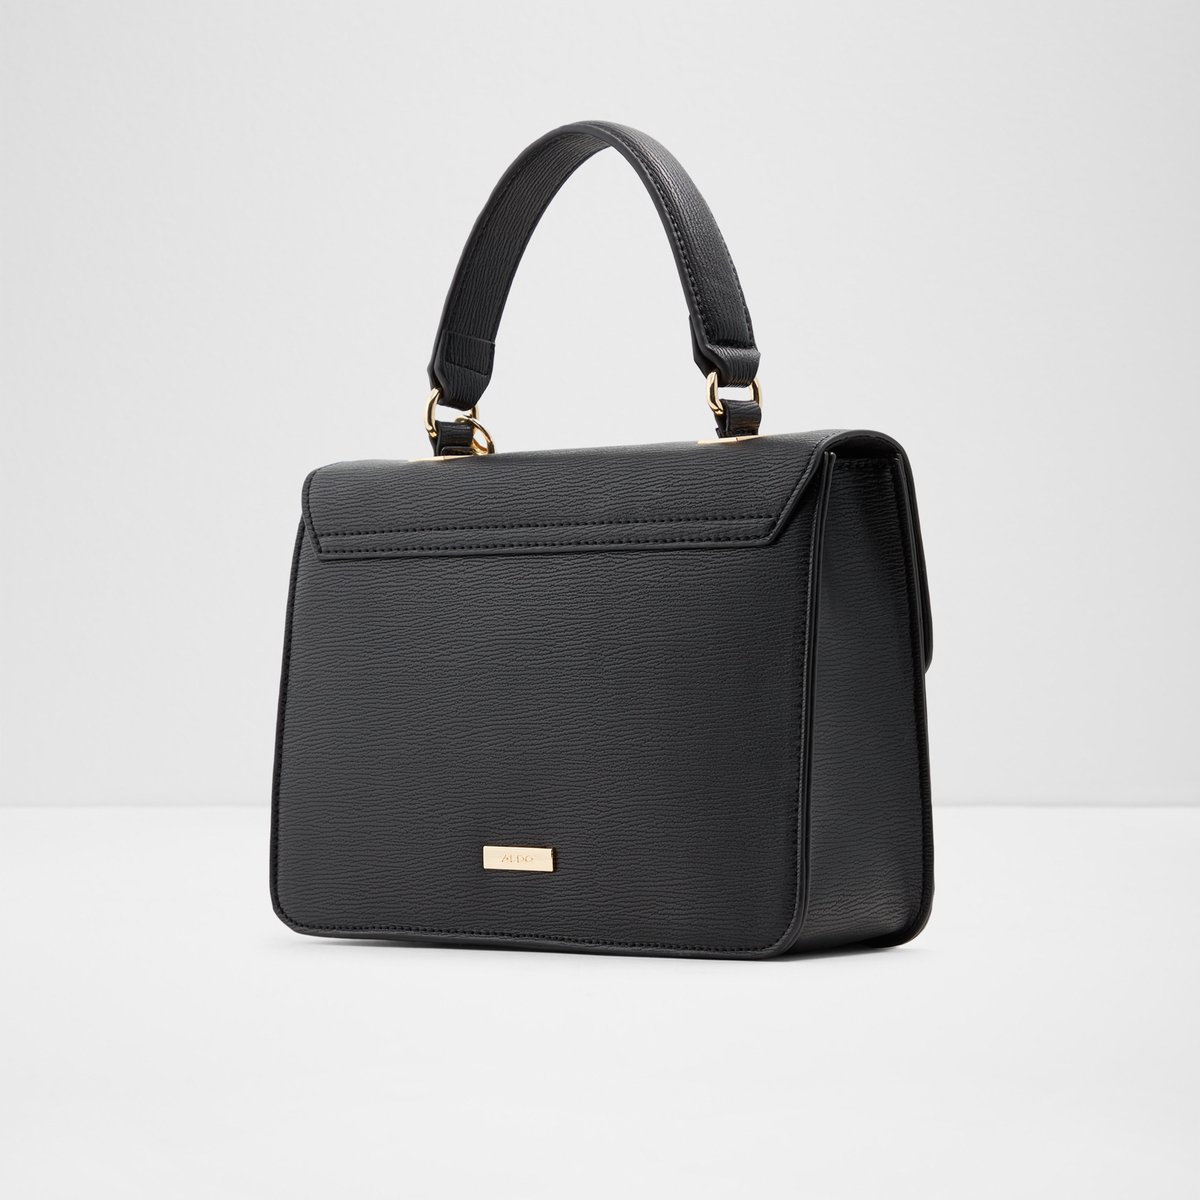 ALDO handbag  Aldo handbags, Bags, Fancy bags